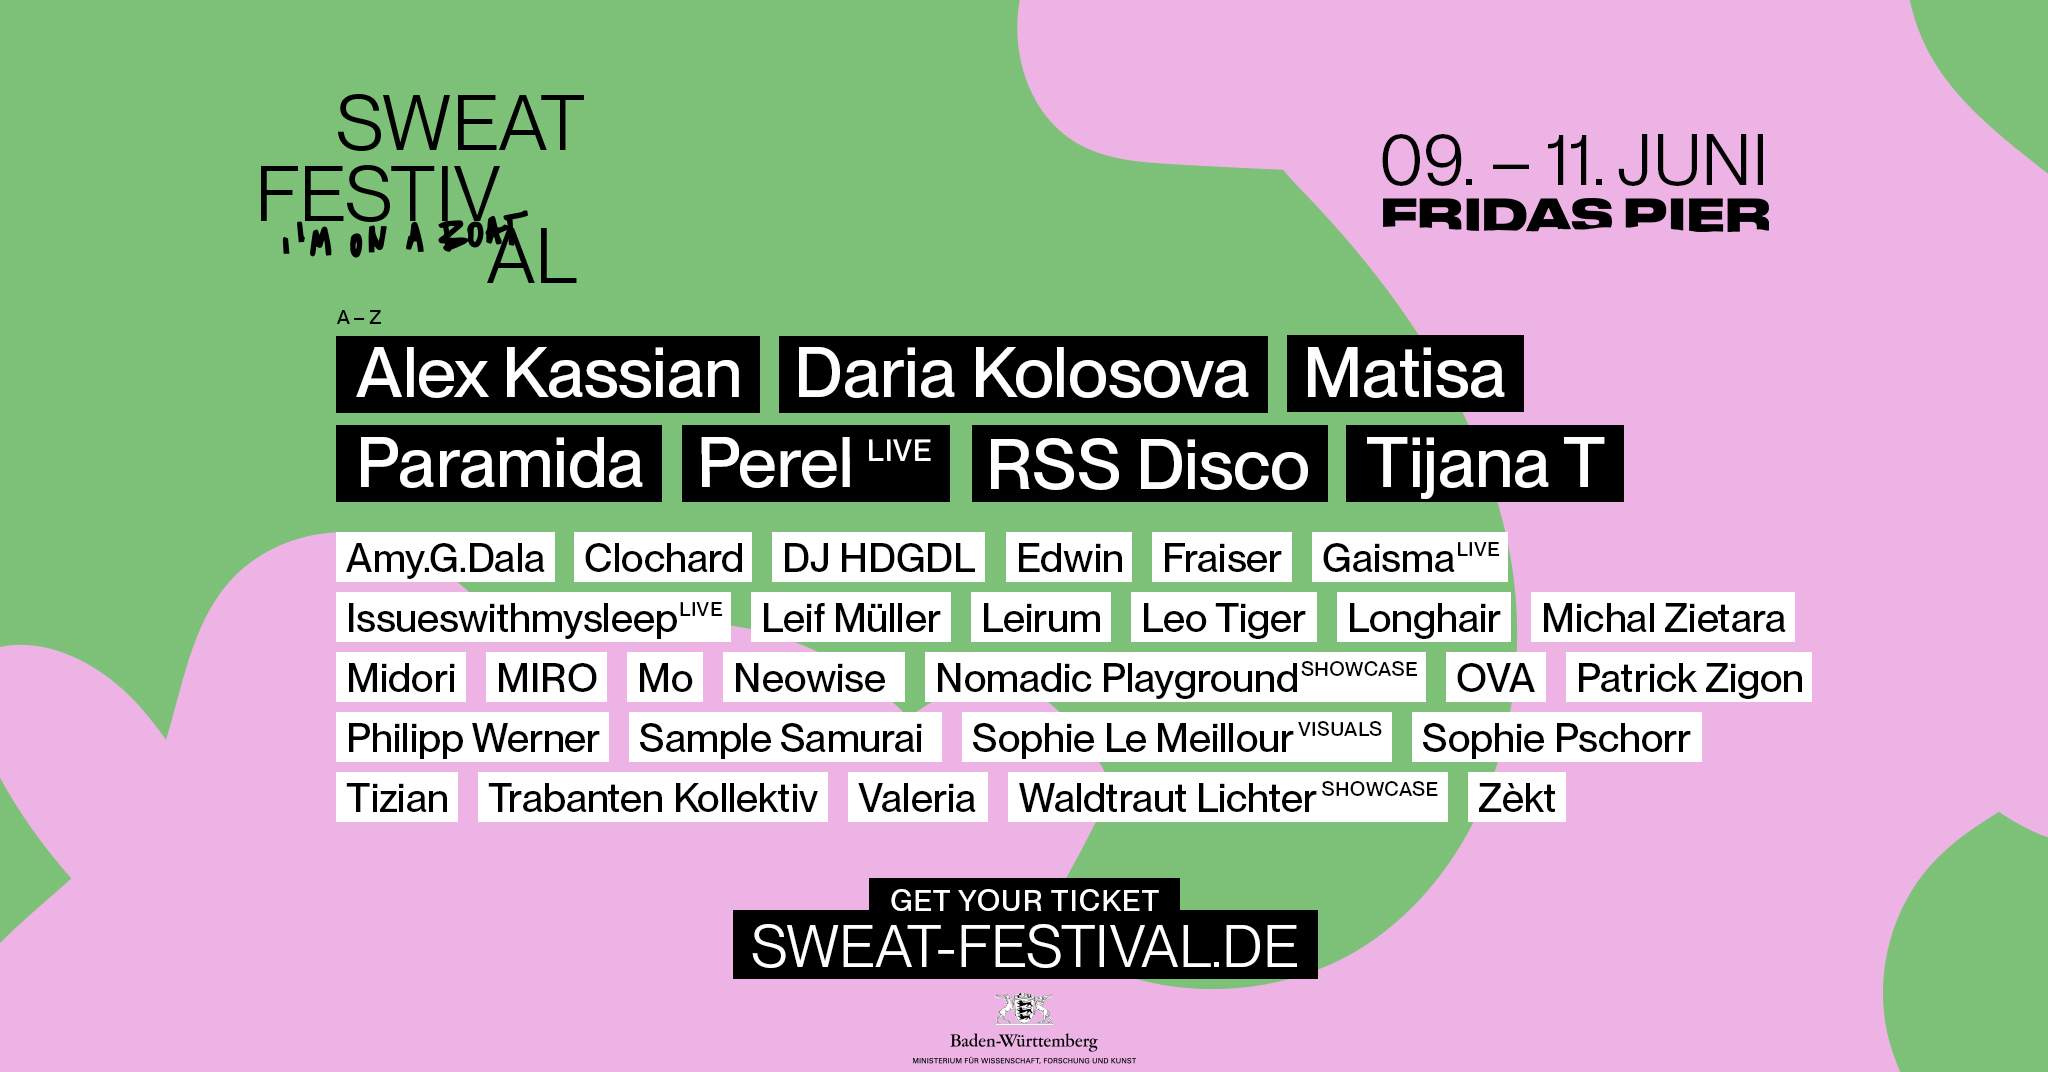 Sweat Festival  x Fridas Pier - フライヤー表